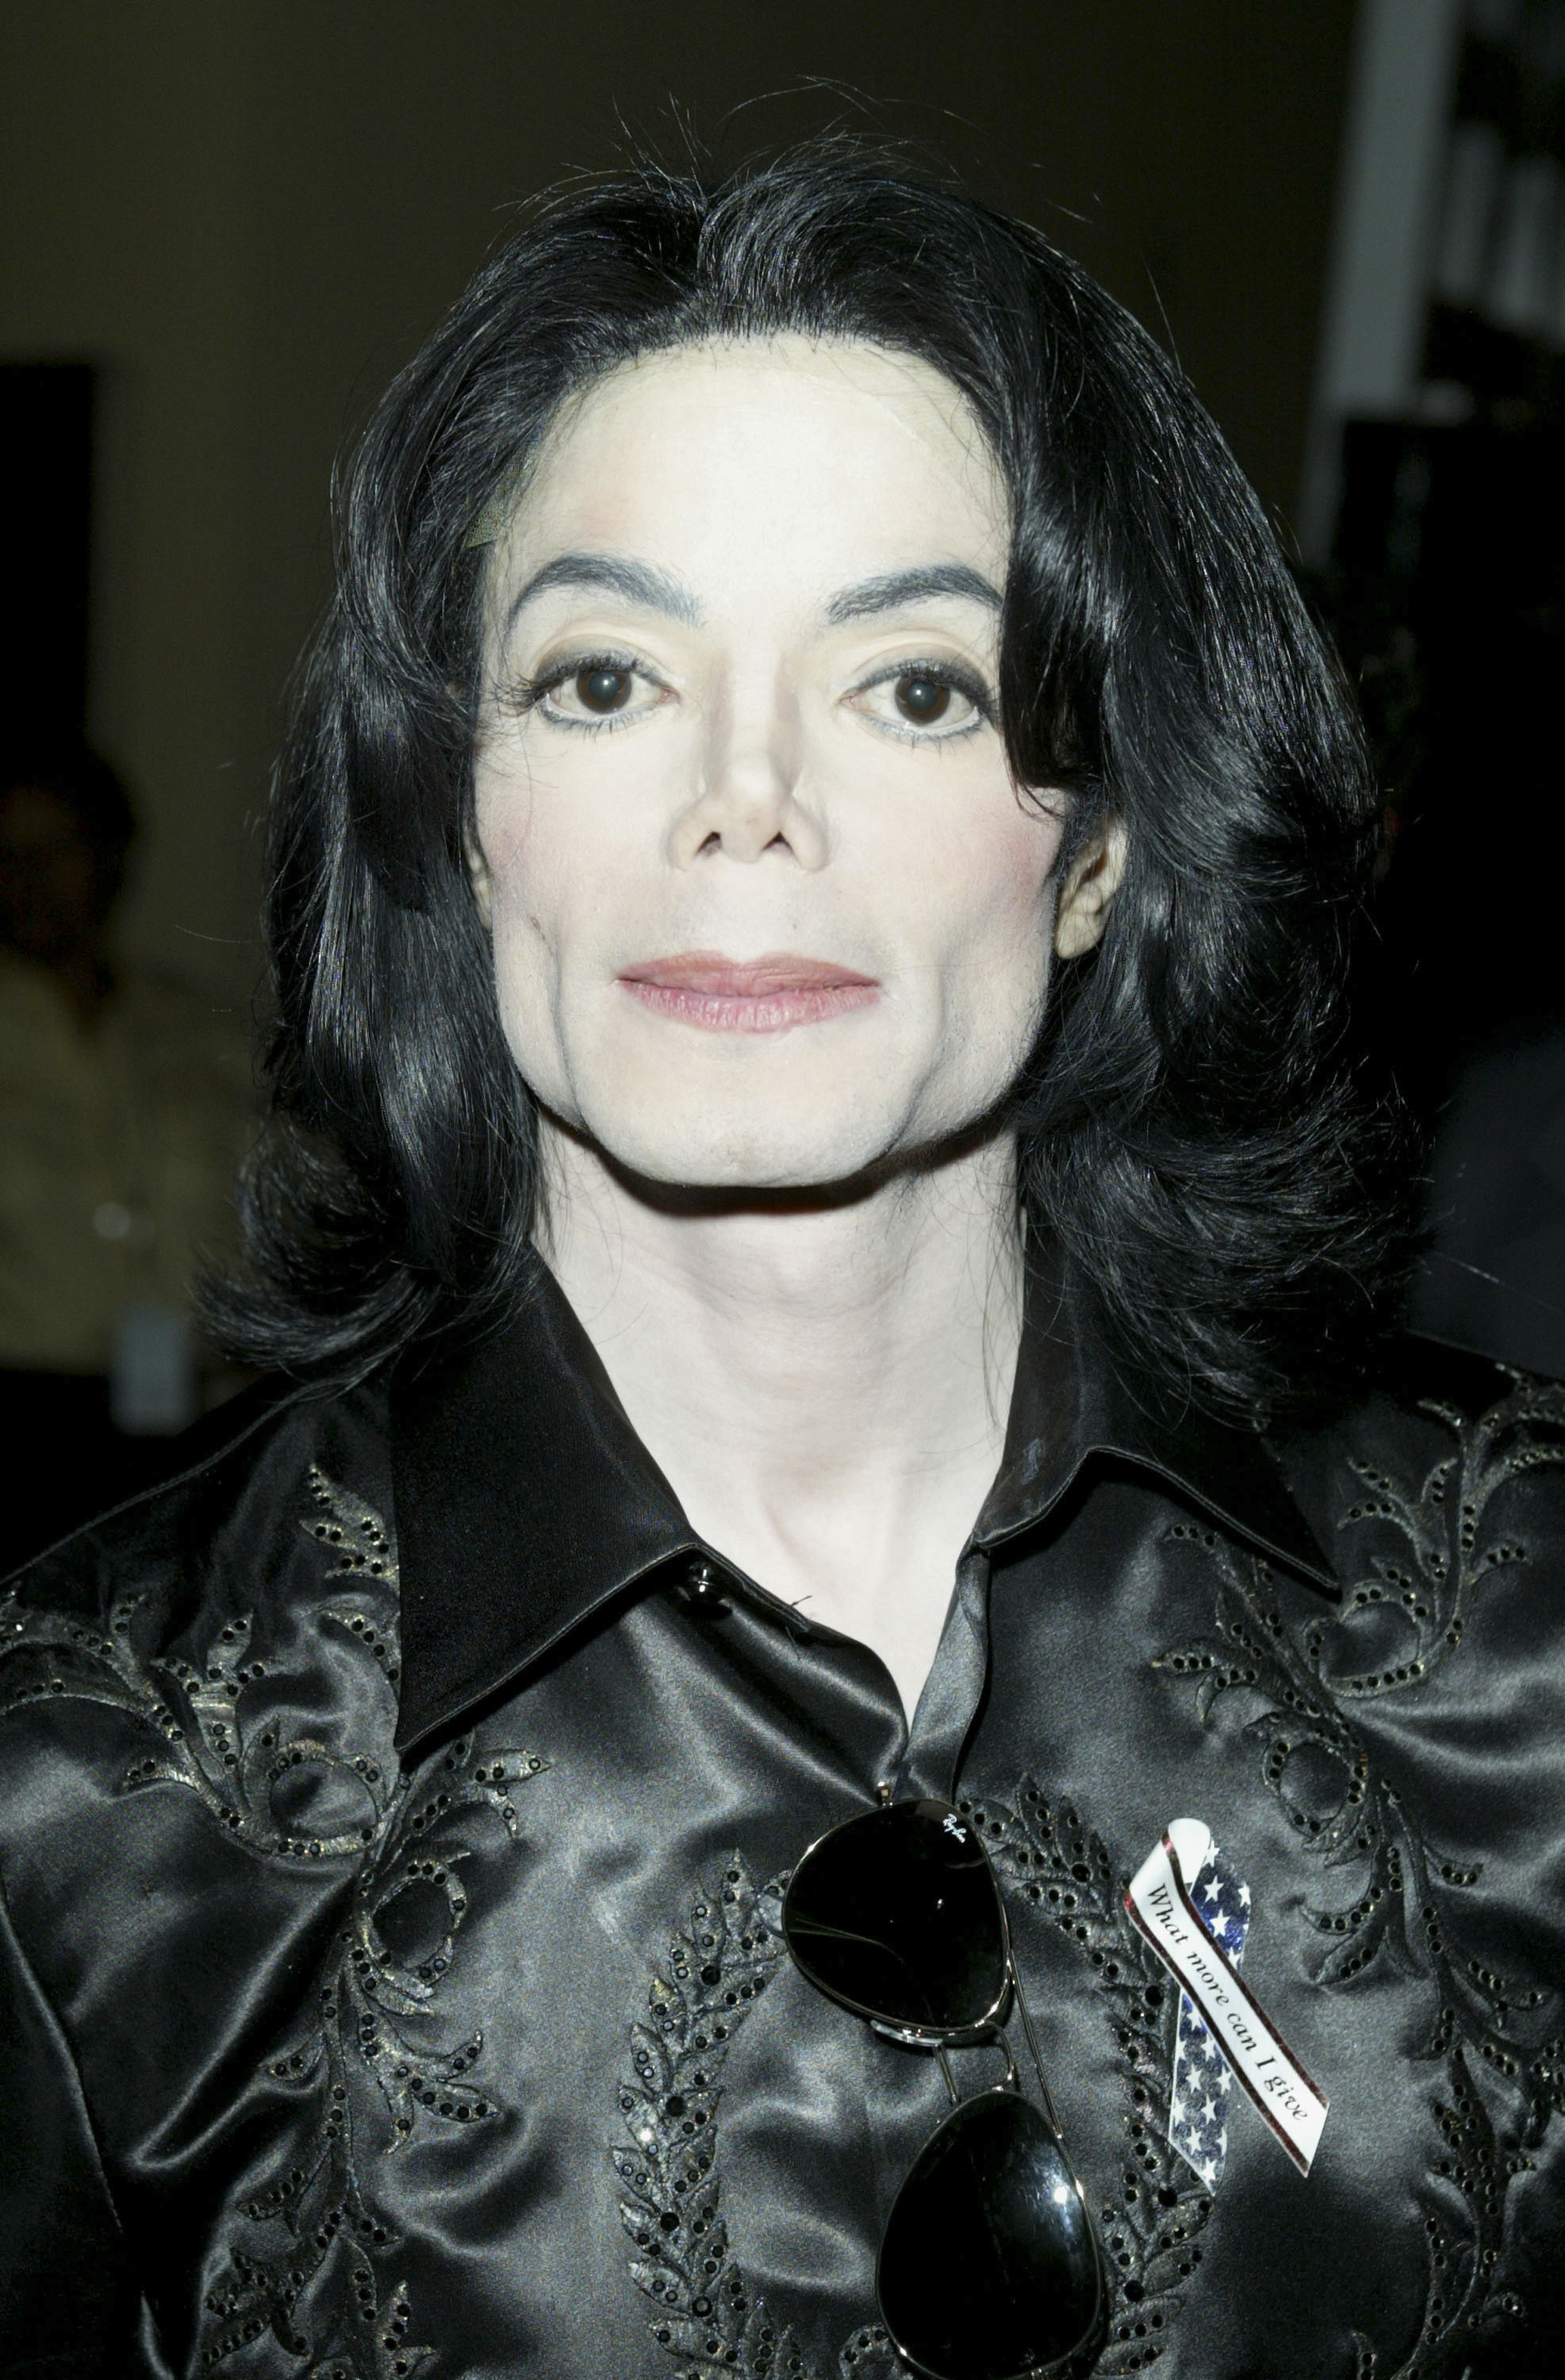 Michael Jackson im Jahr 2003 | Quelle: Getty Images